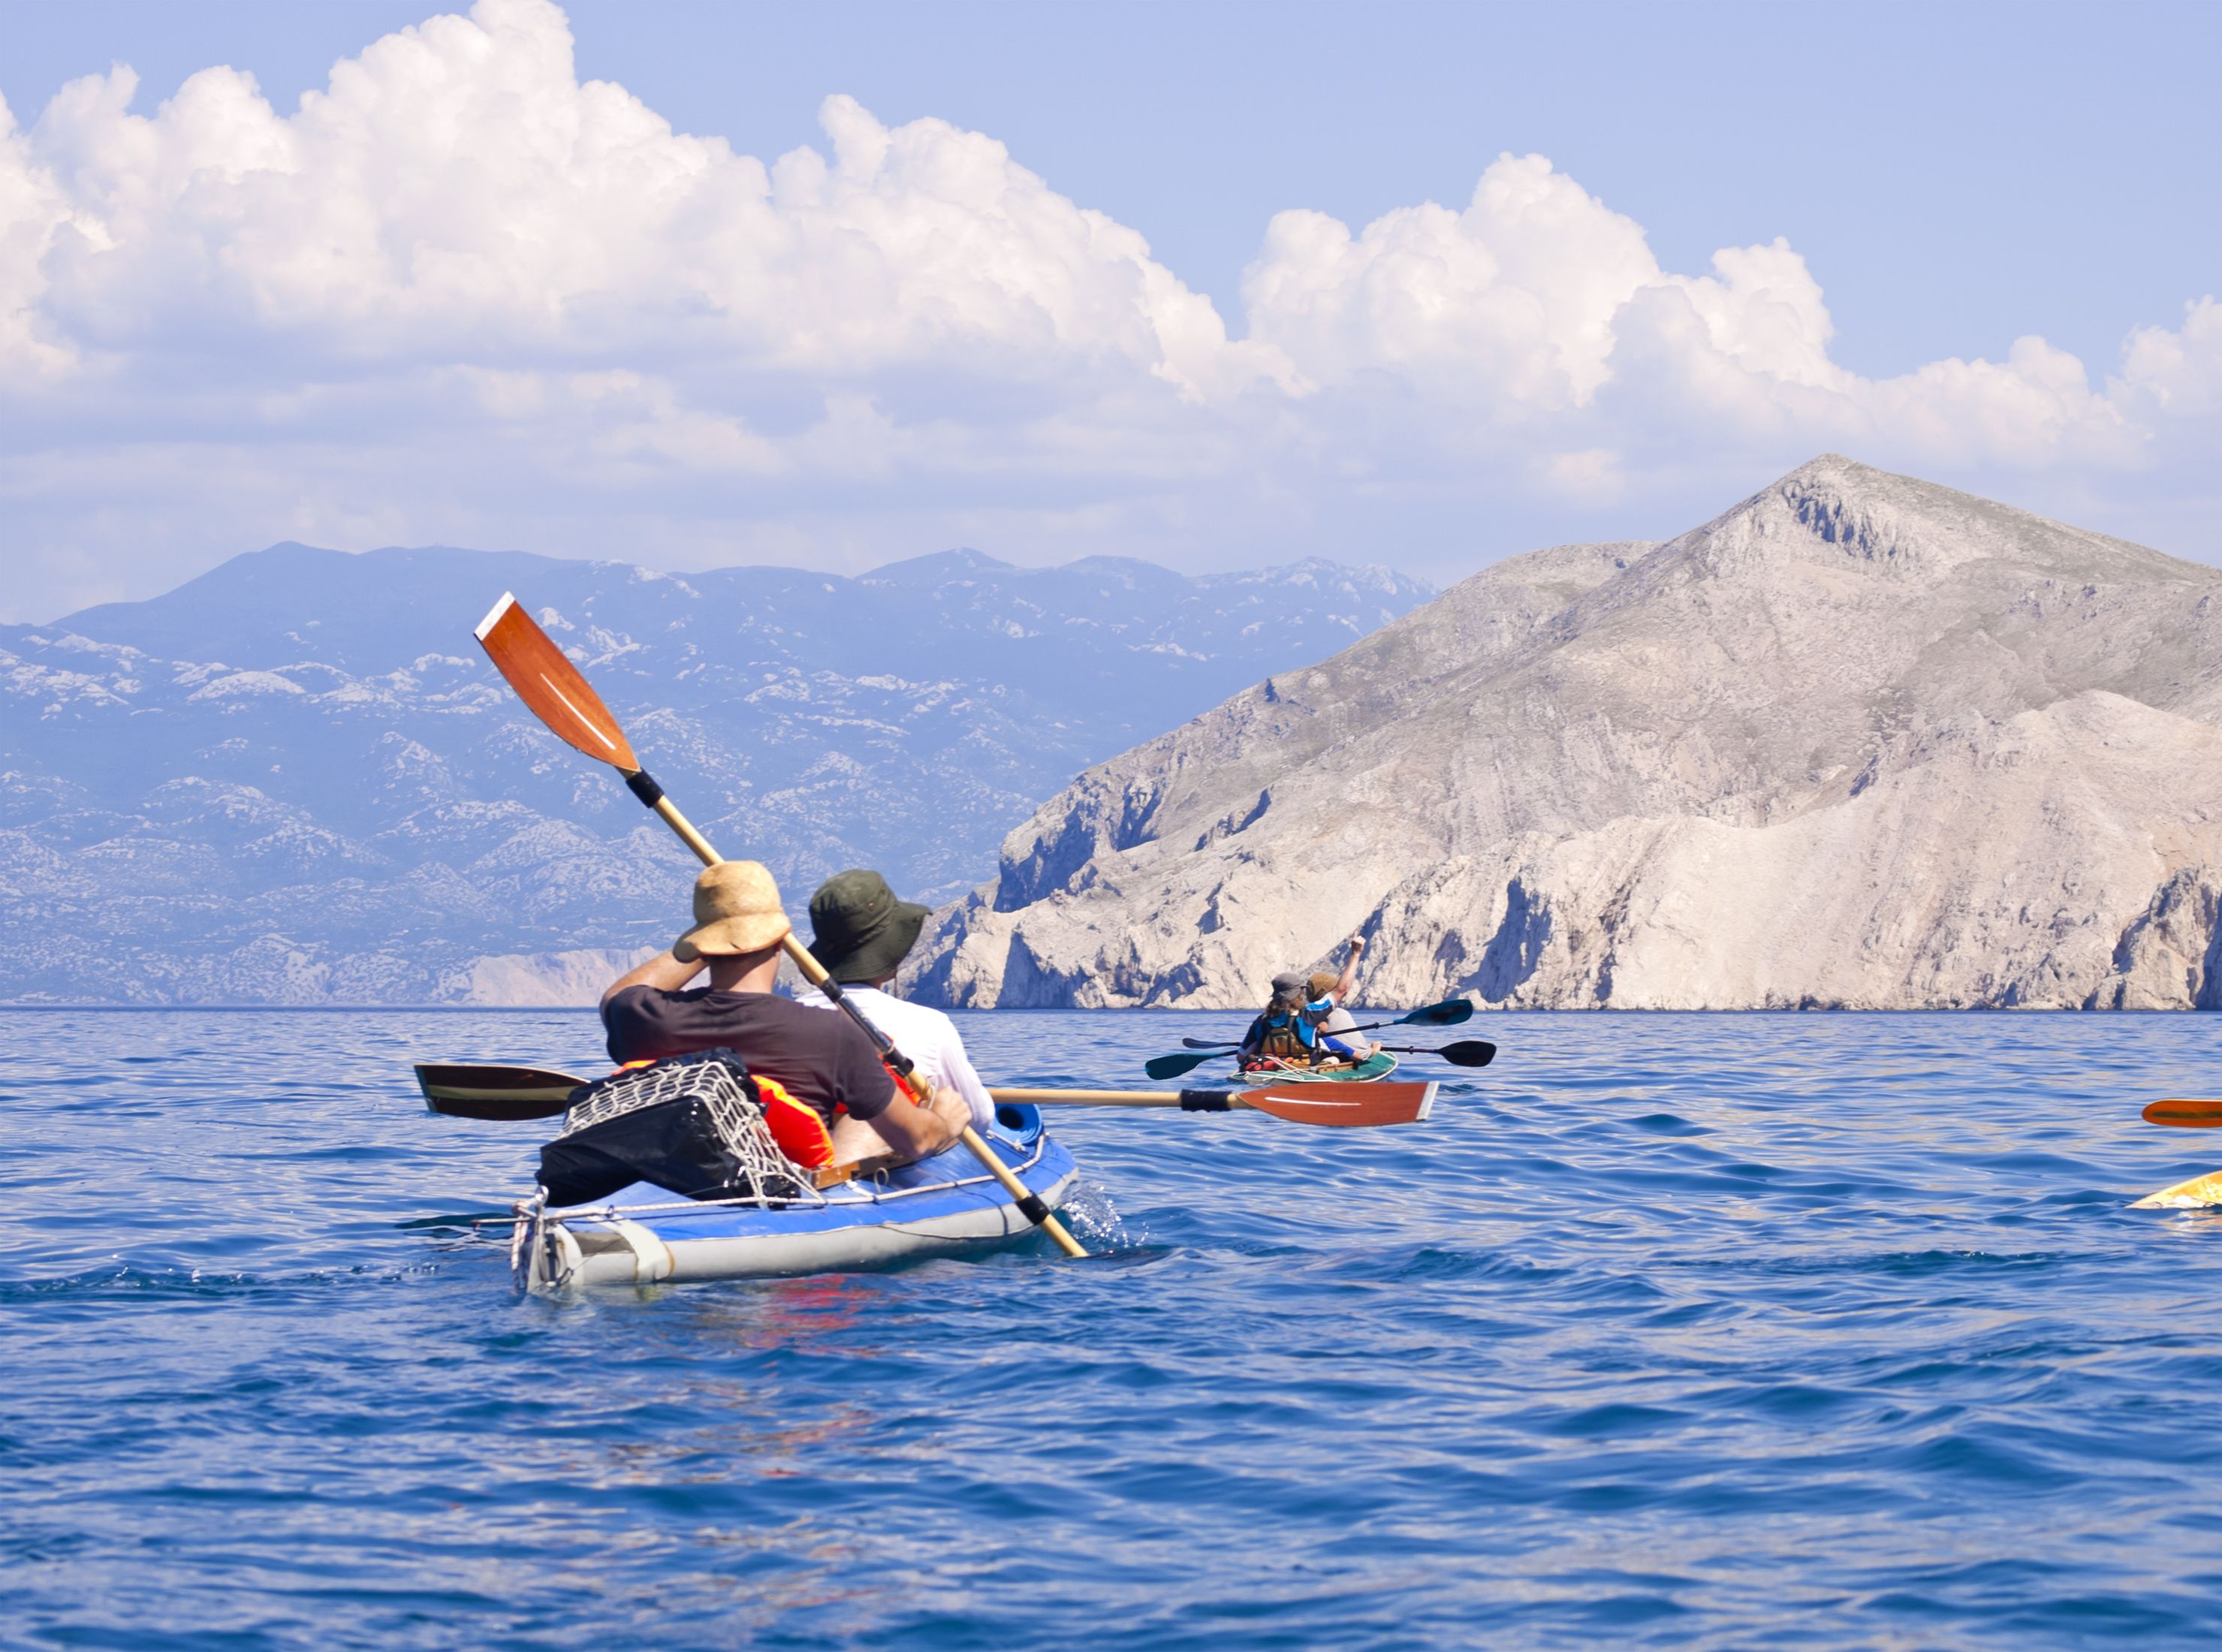 Should You Buy a Boat or Kayak?